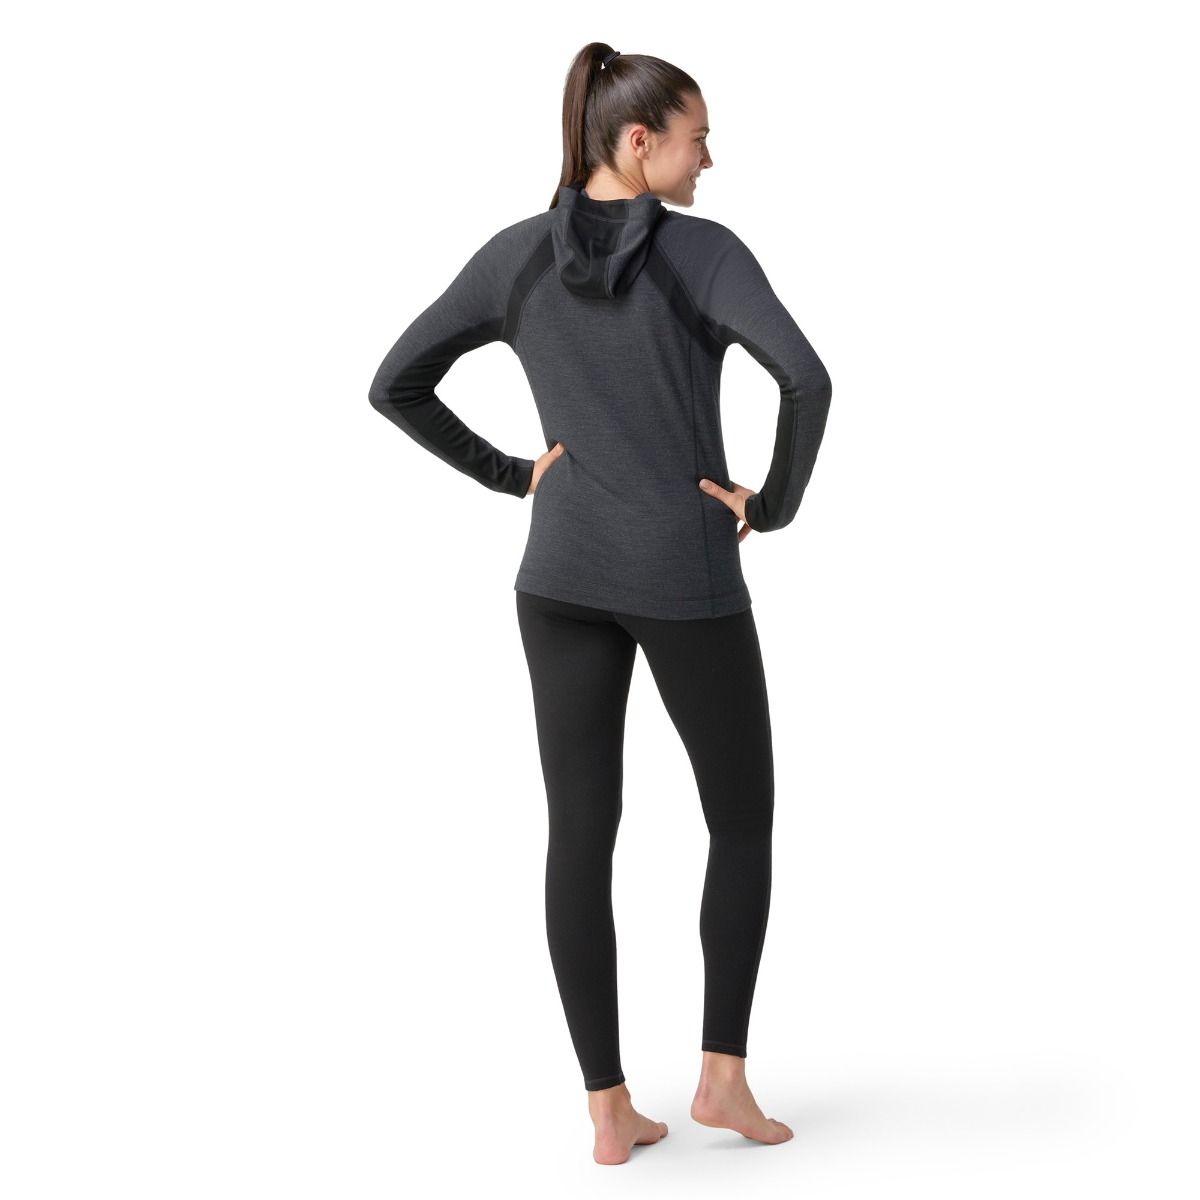  PRDECE Sweatshirt for Women Zipper Drawstring Thermal